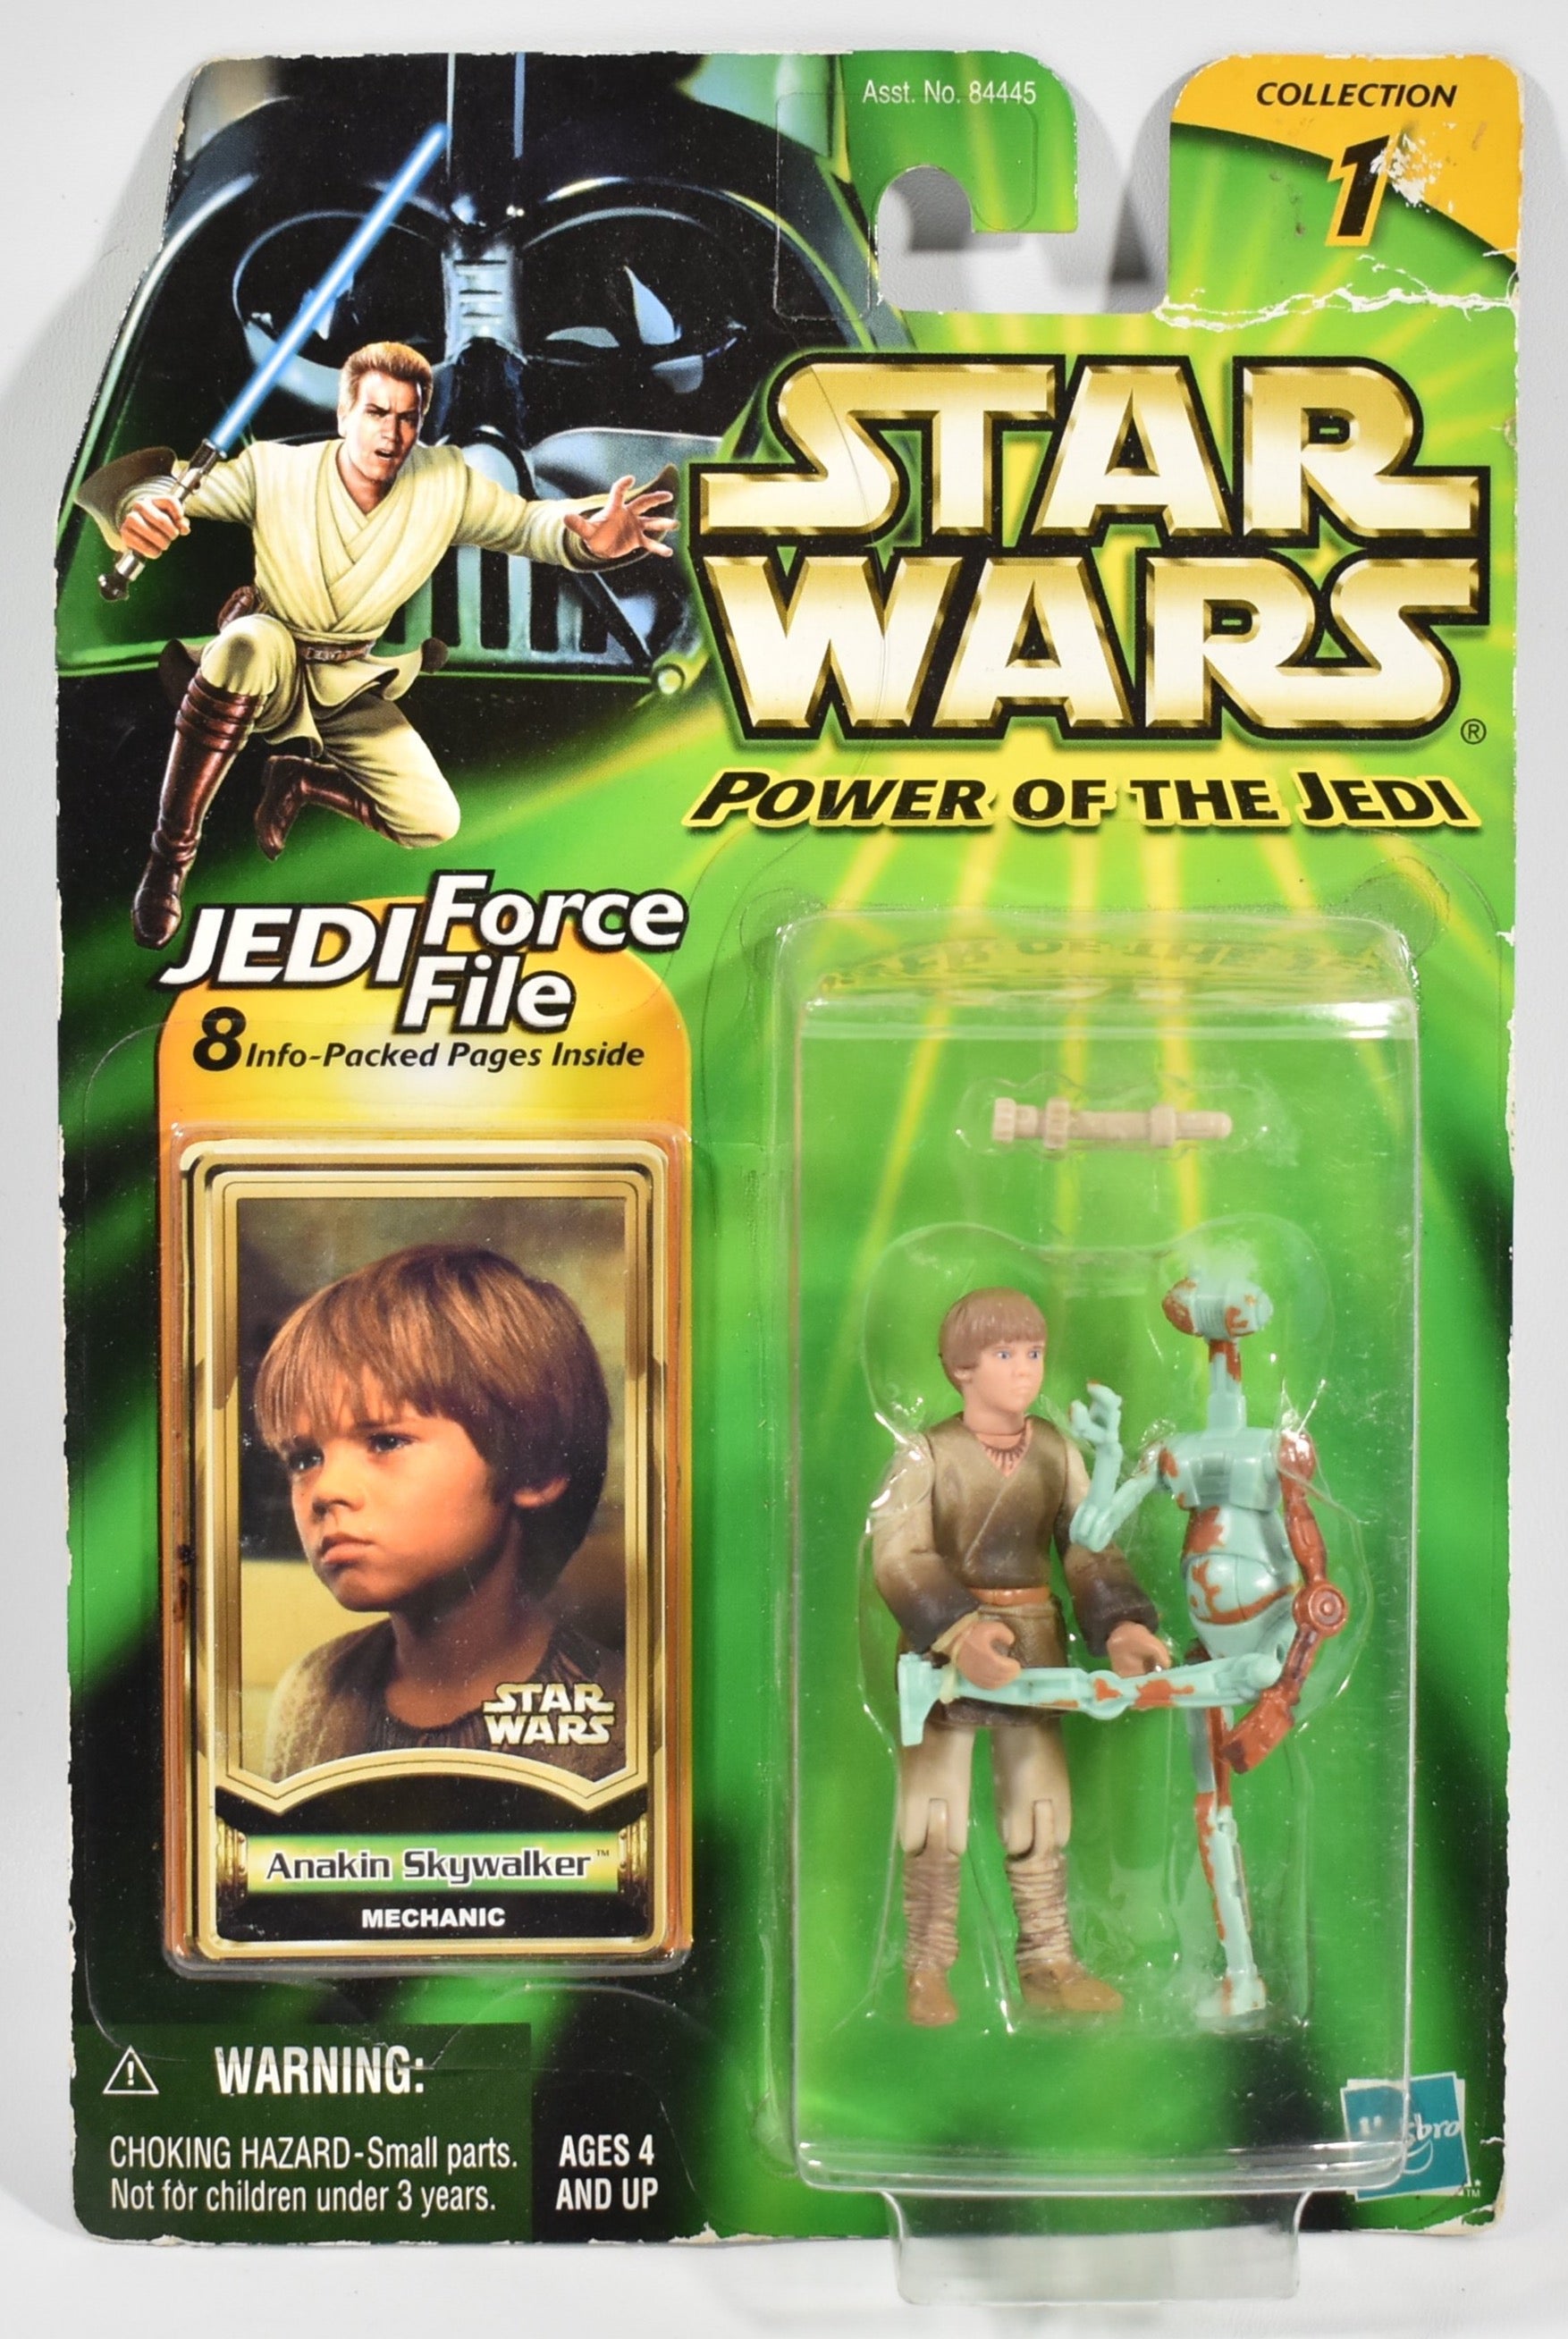 Star Wars Power of the Jedi Action Figure Anakin Skywalker Mechanic